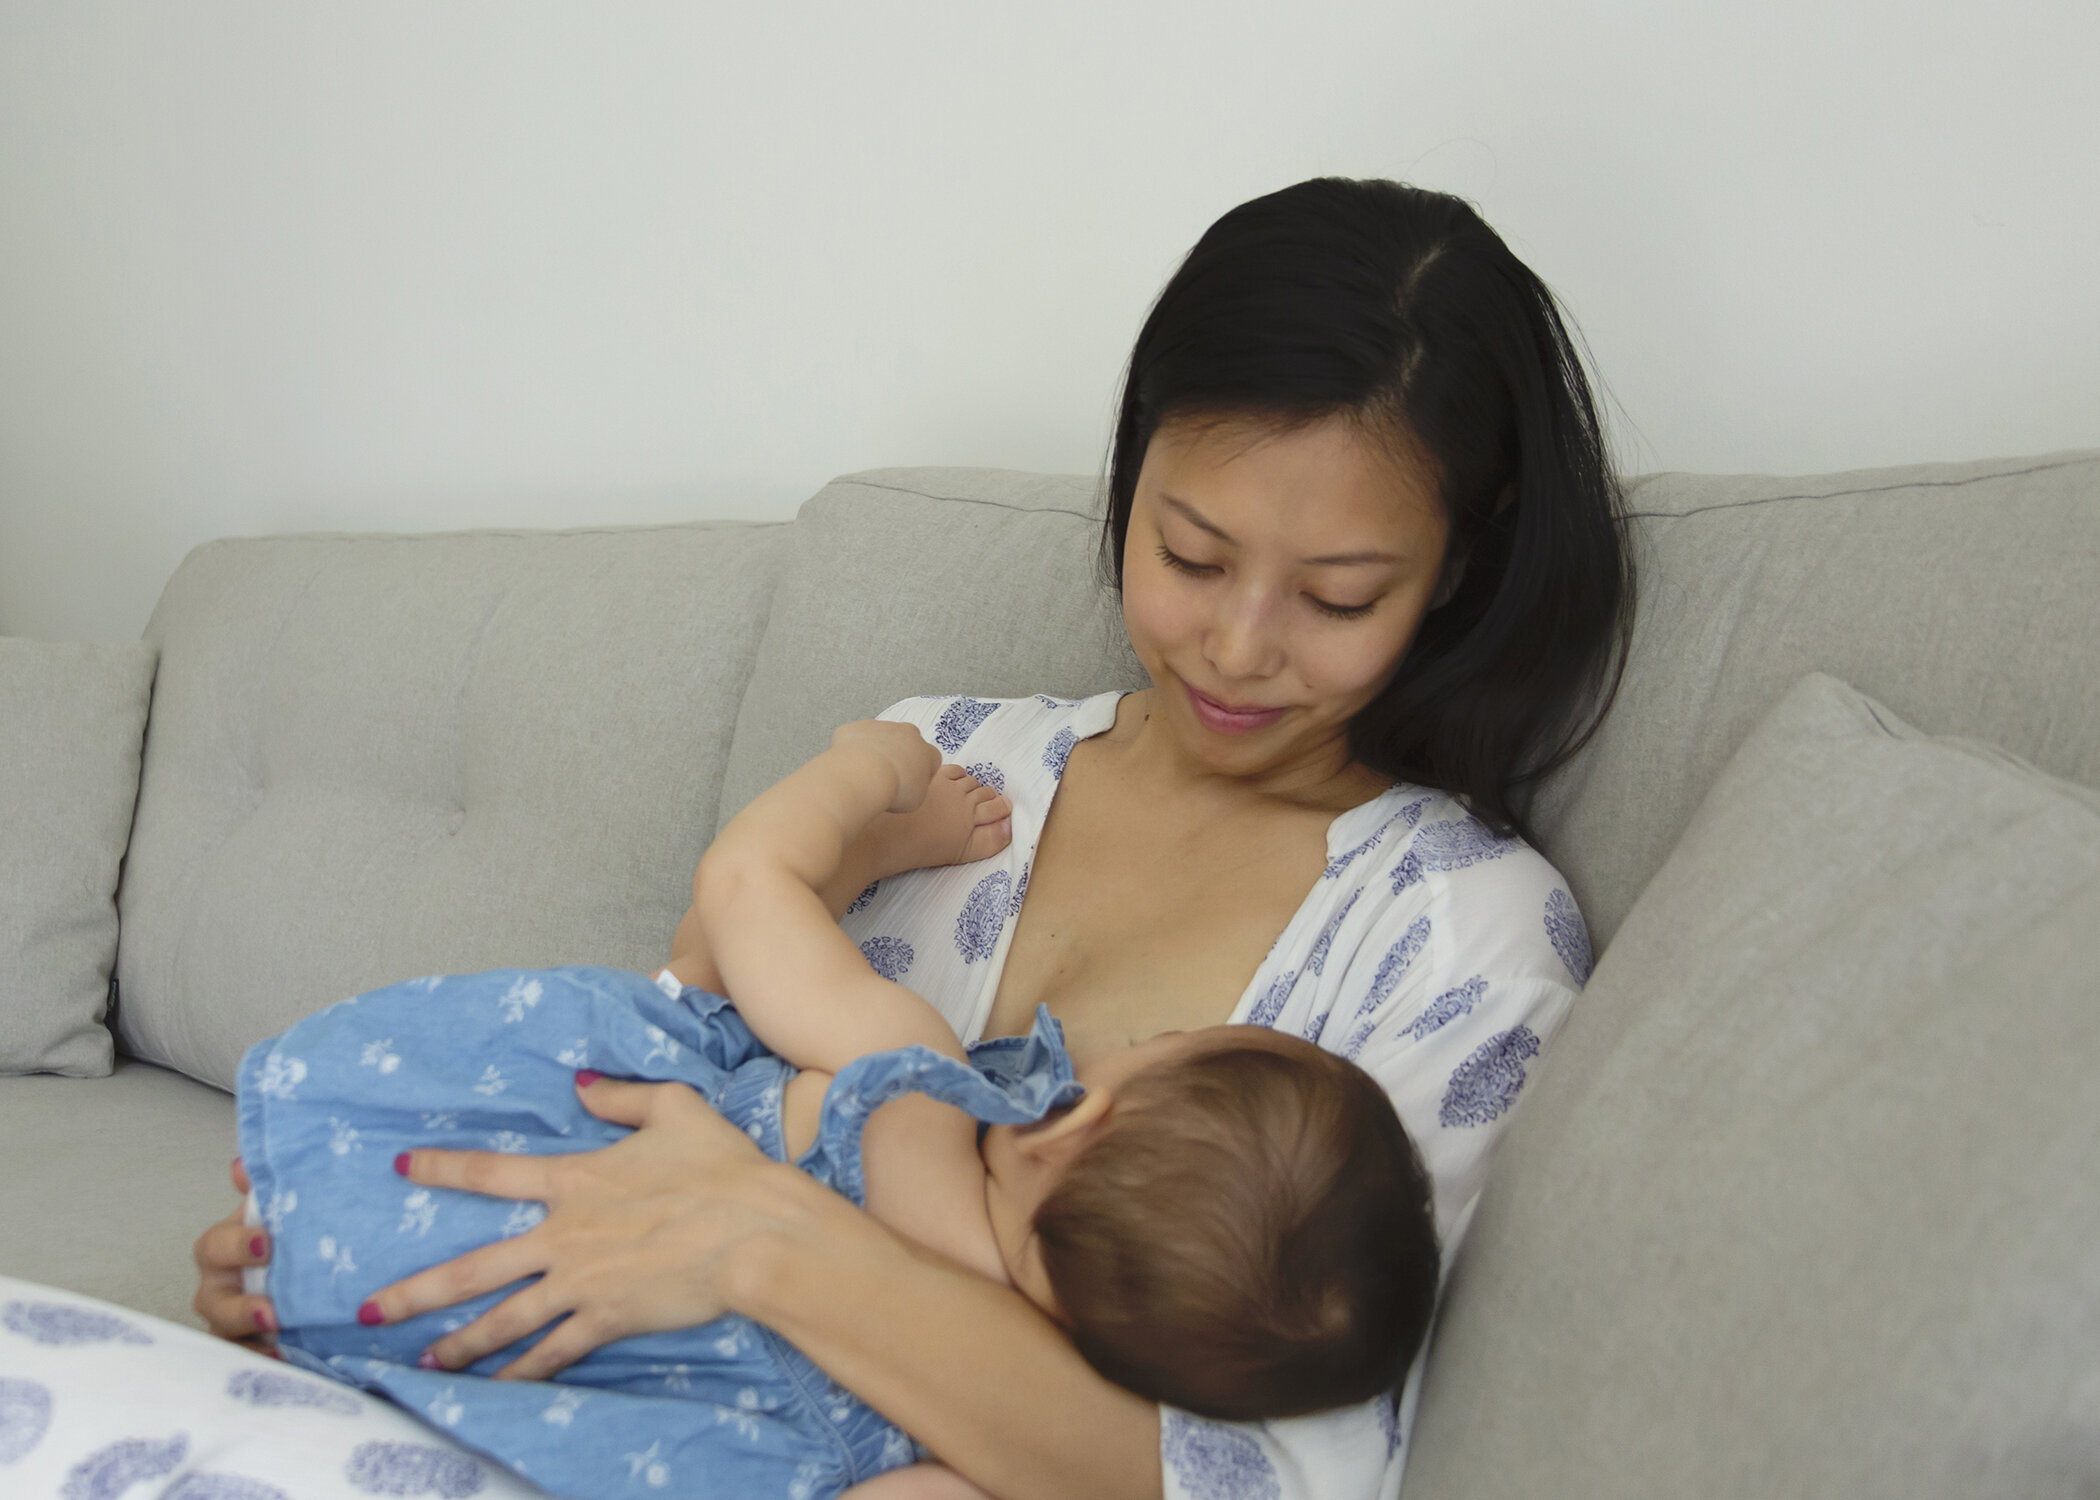 Hertfordshire &amp; London Breastfeeding Motherhood Photographer